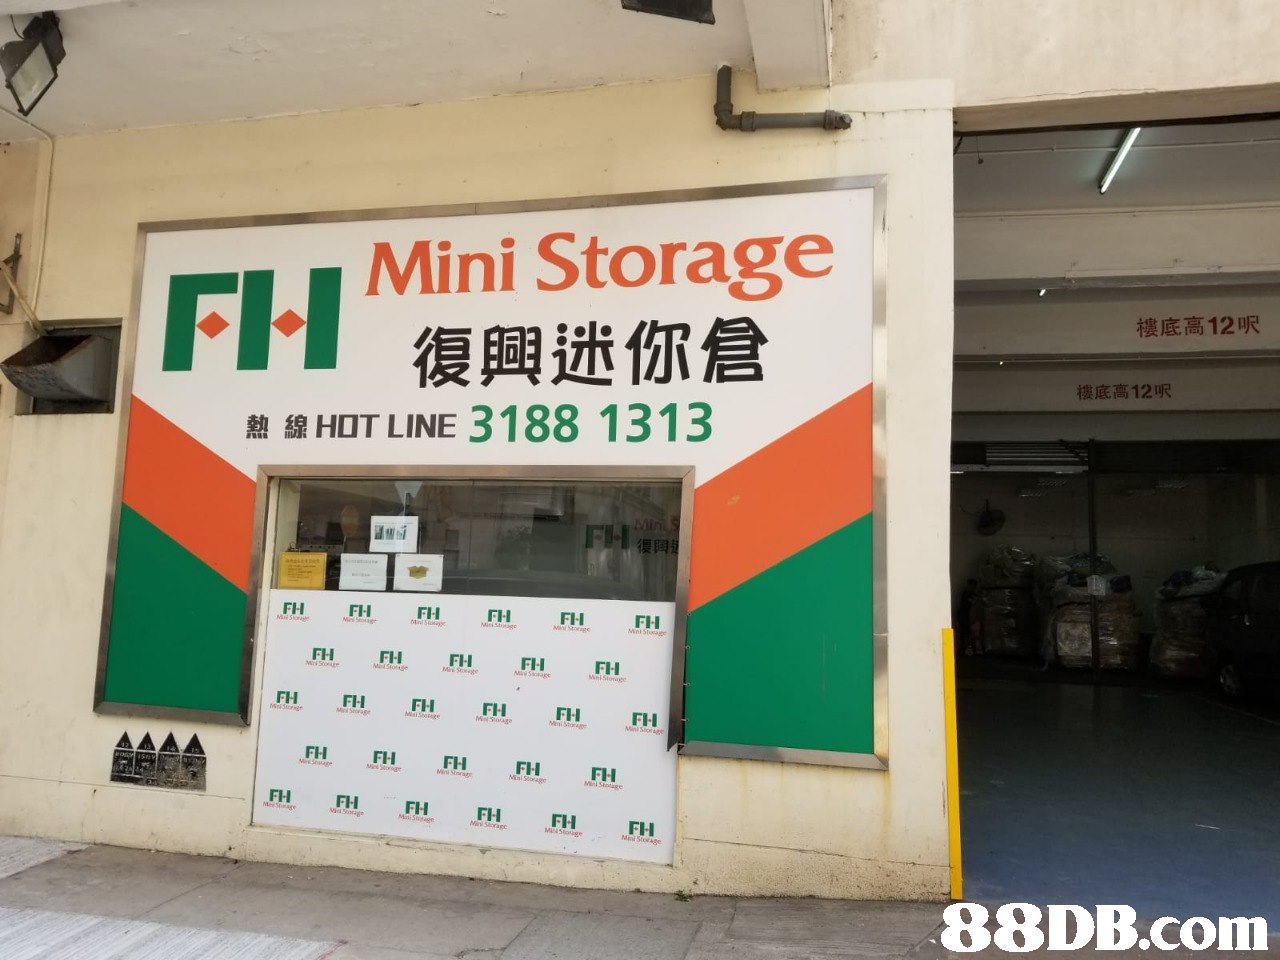 Mini Storage 1.1 復興迷你倉 熱線HOT LINE 3188 1313 樓底高12呎 樓底高12呎 復剛 FH H H F   